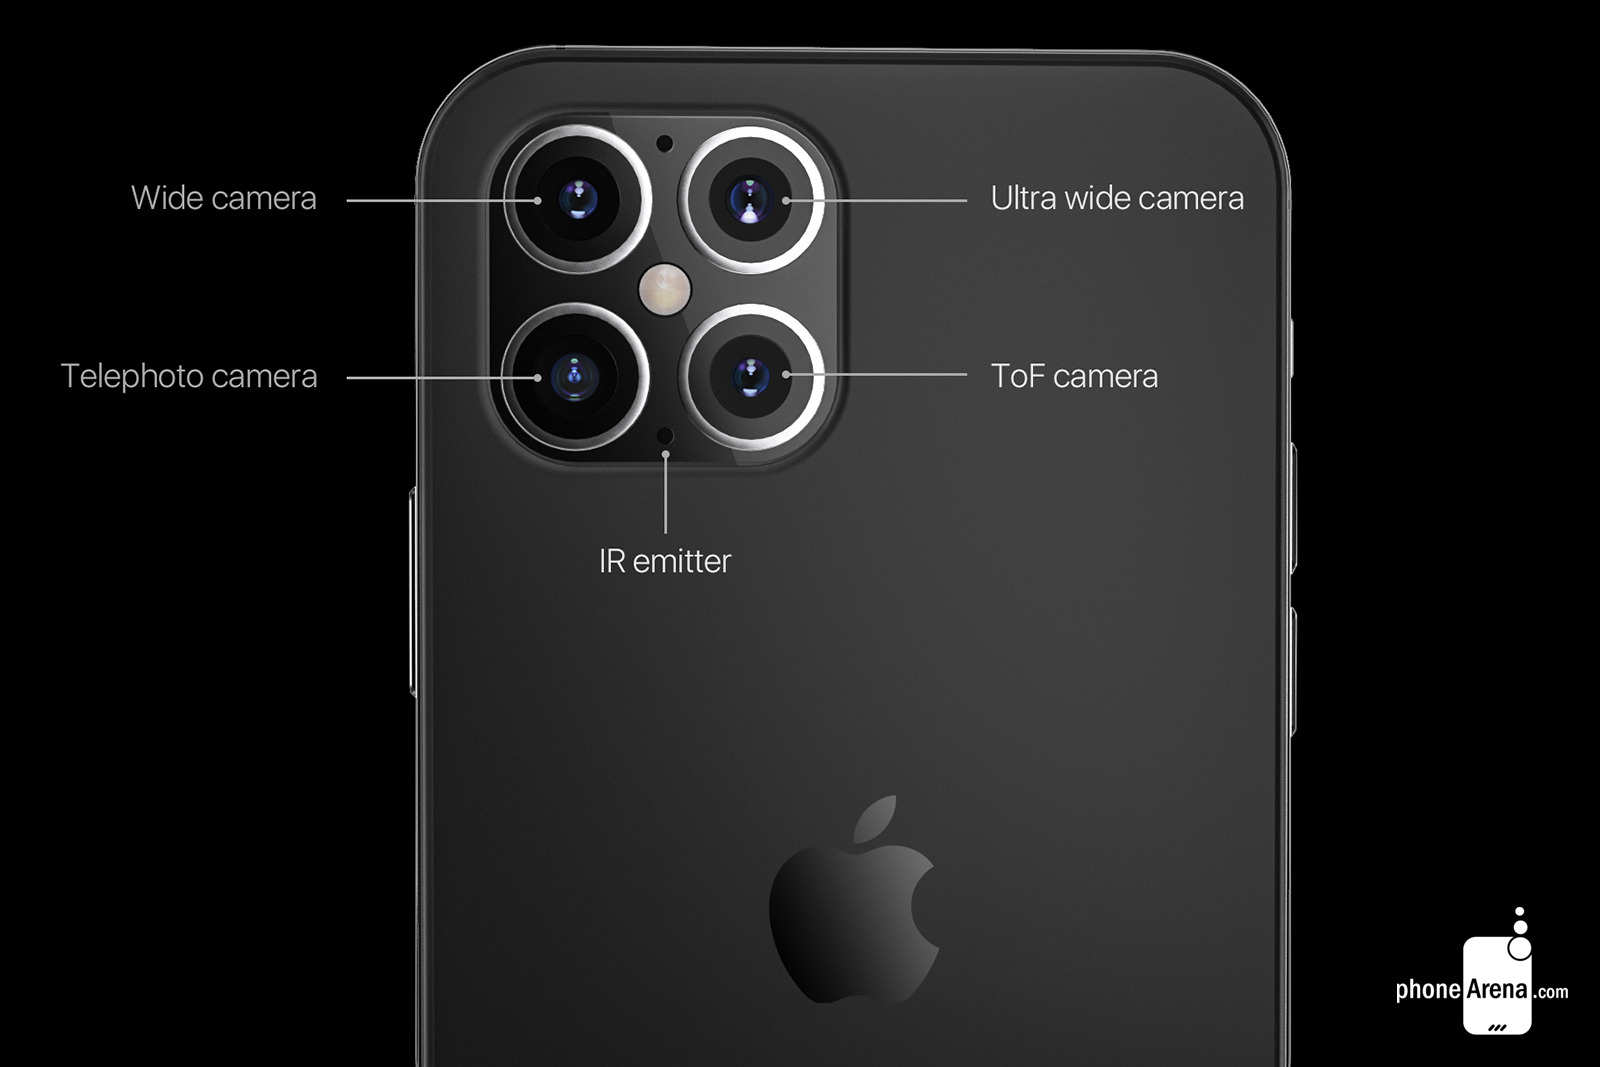 iPhone-12-camera-explained.jpg